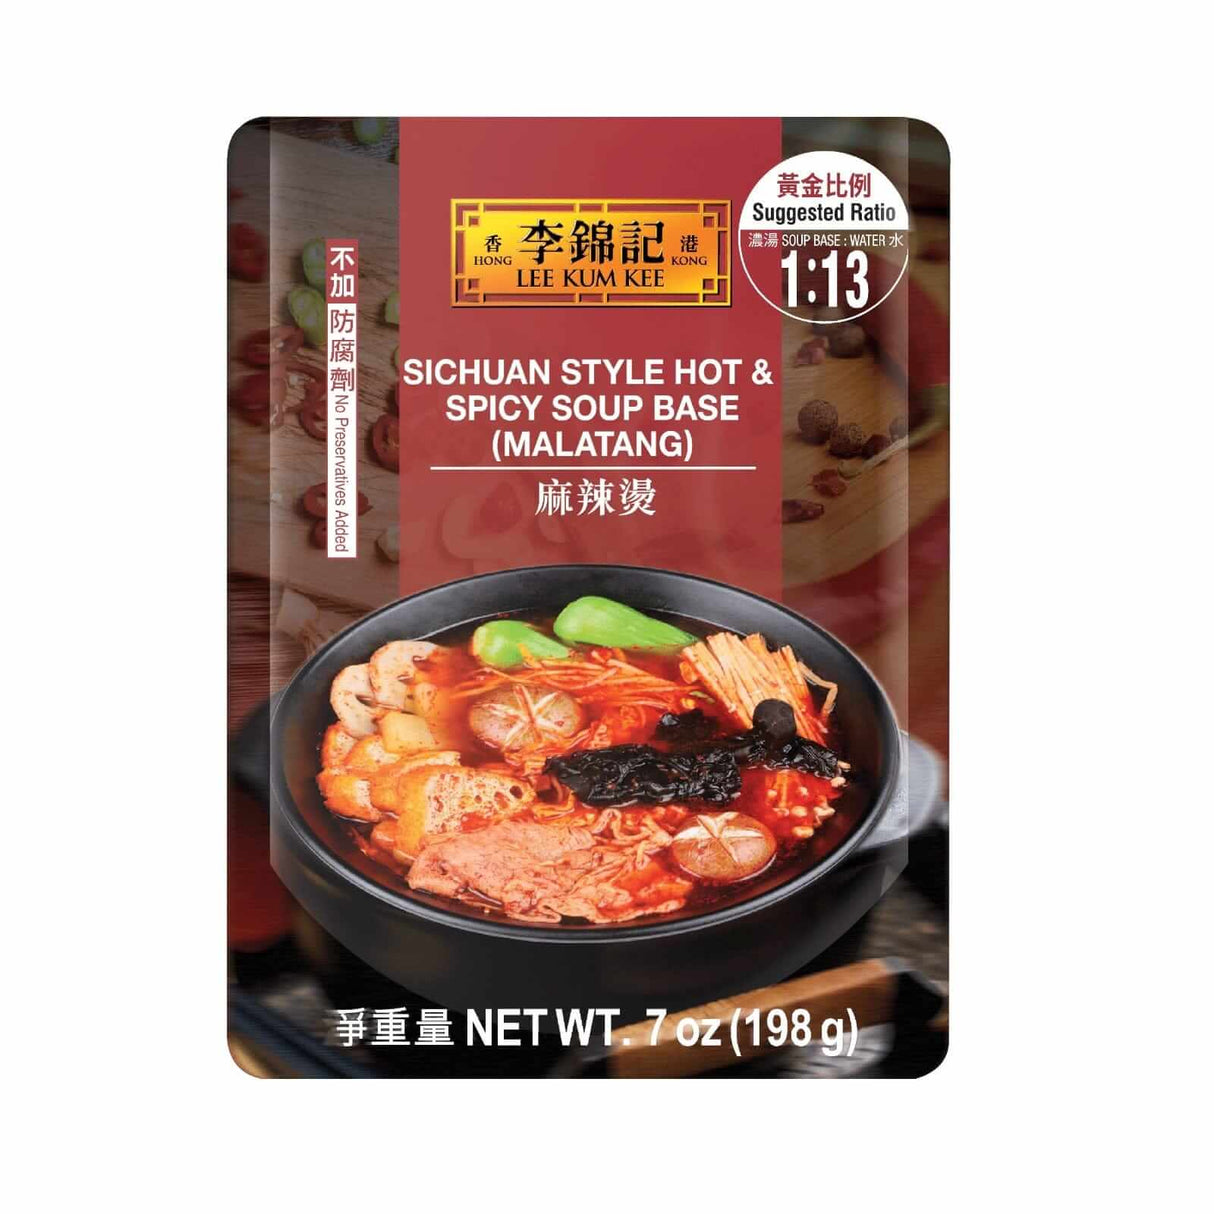 Lee Kum Kee Soup Base for Sichuan Style Hot Pot (Malatang)